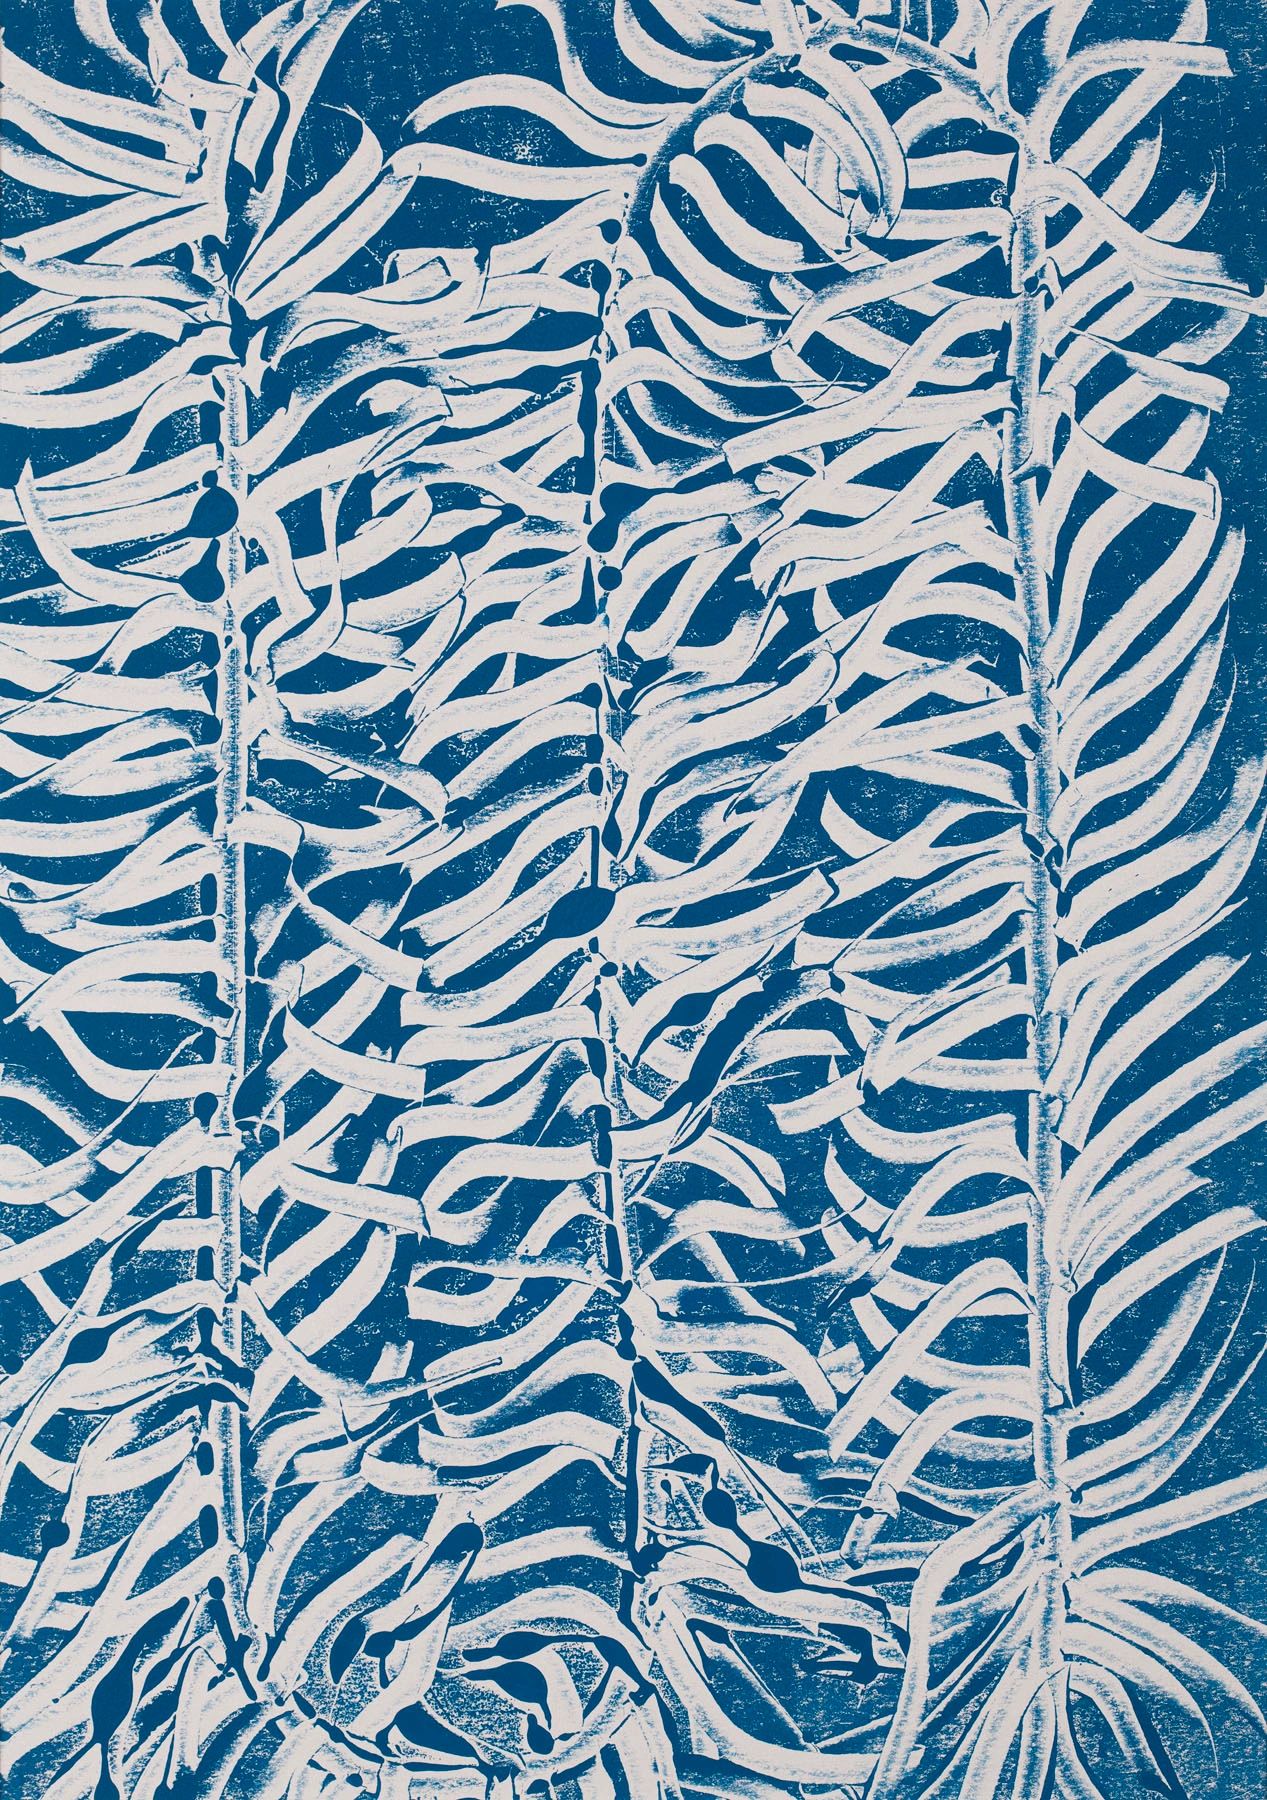 Blue and white monoprint artwork